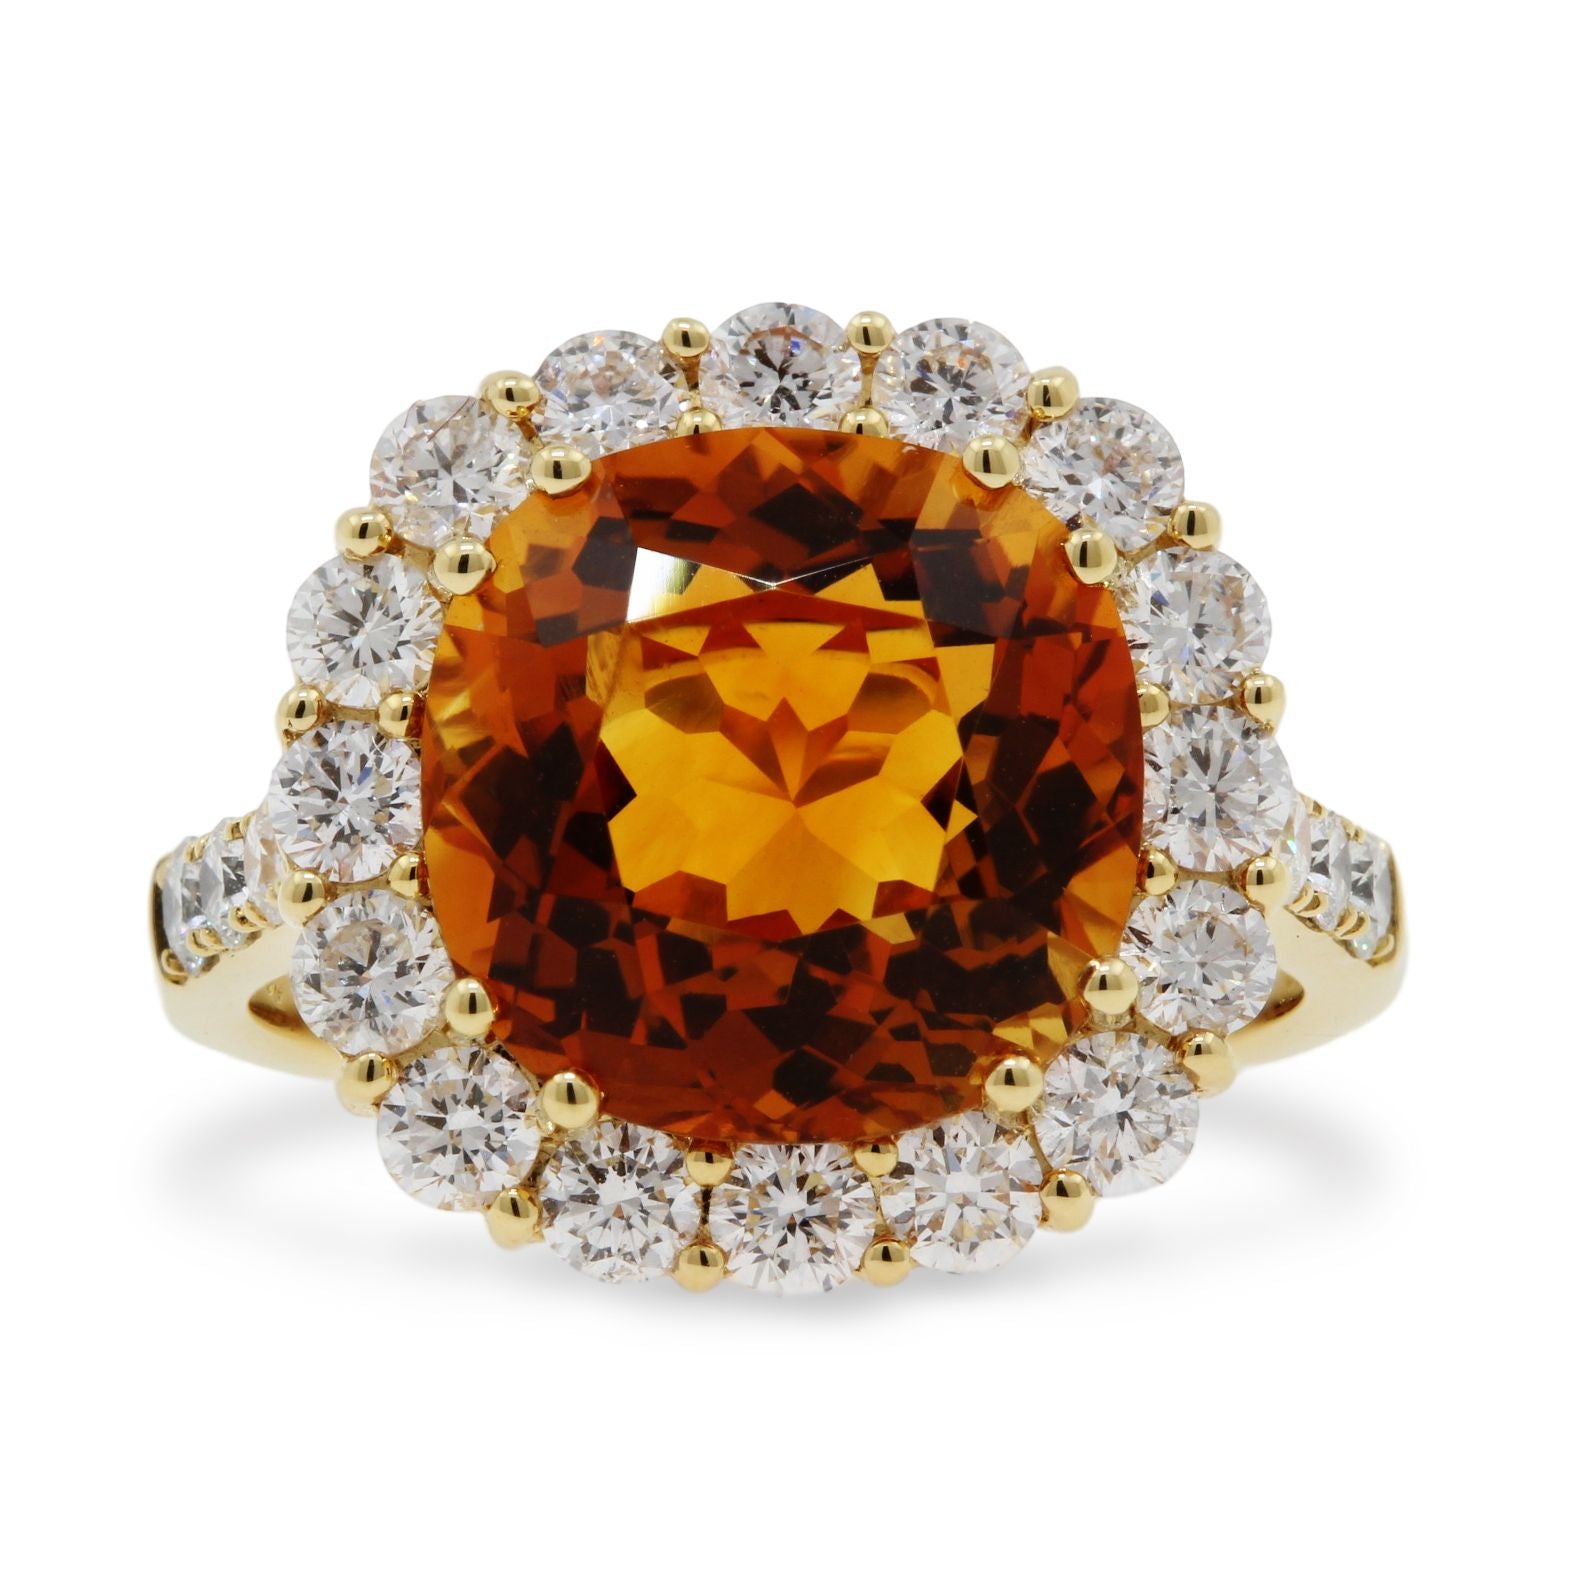 Luxurious 18ct gold gemstone ring